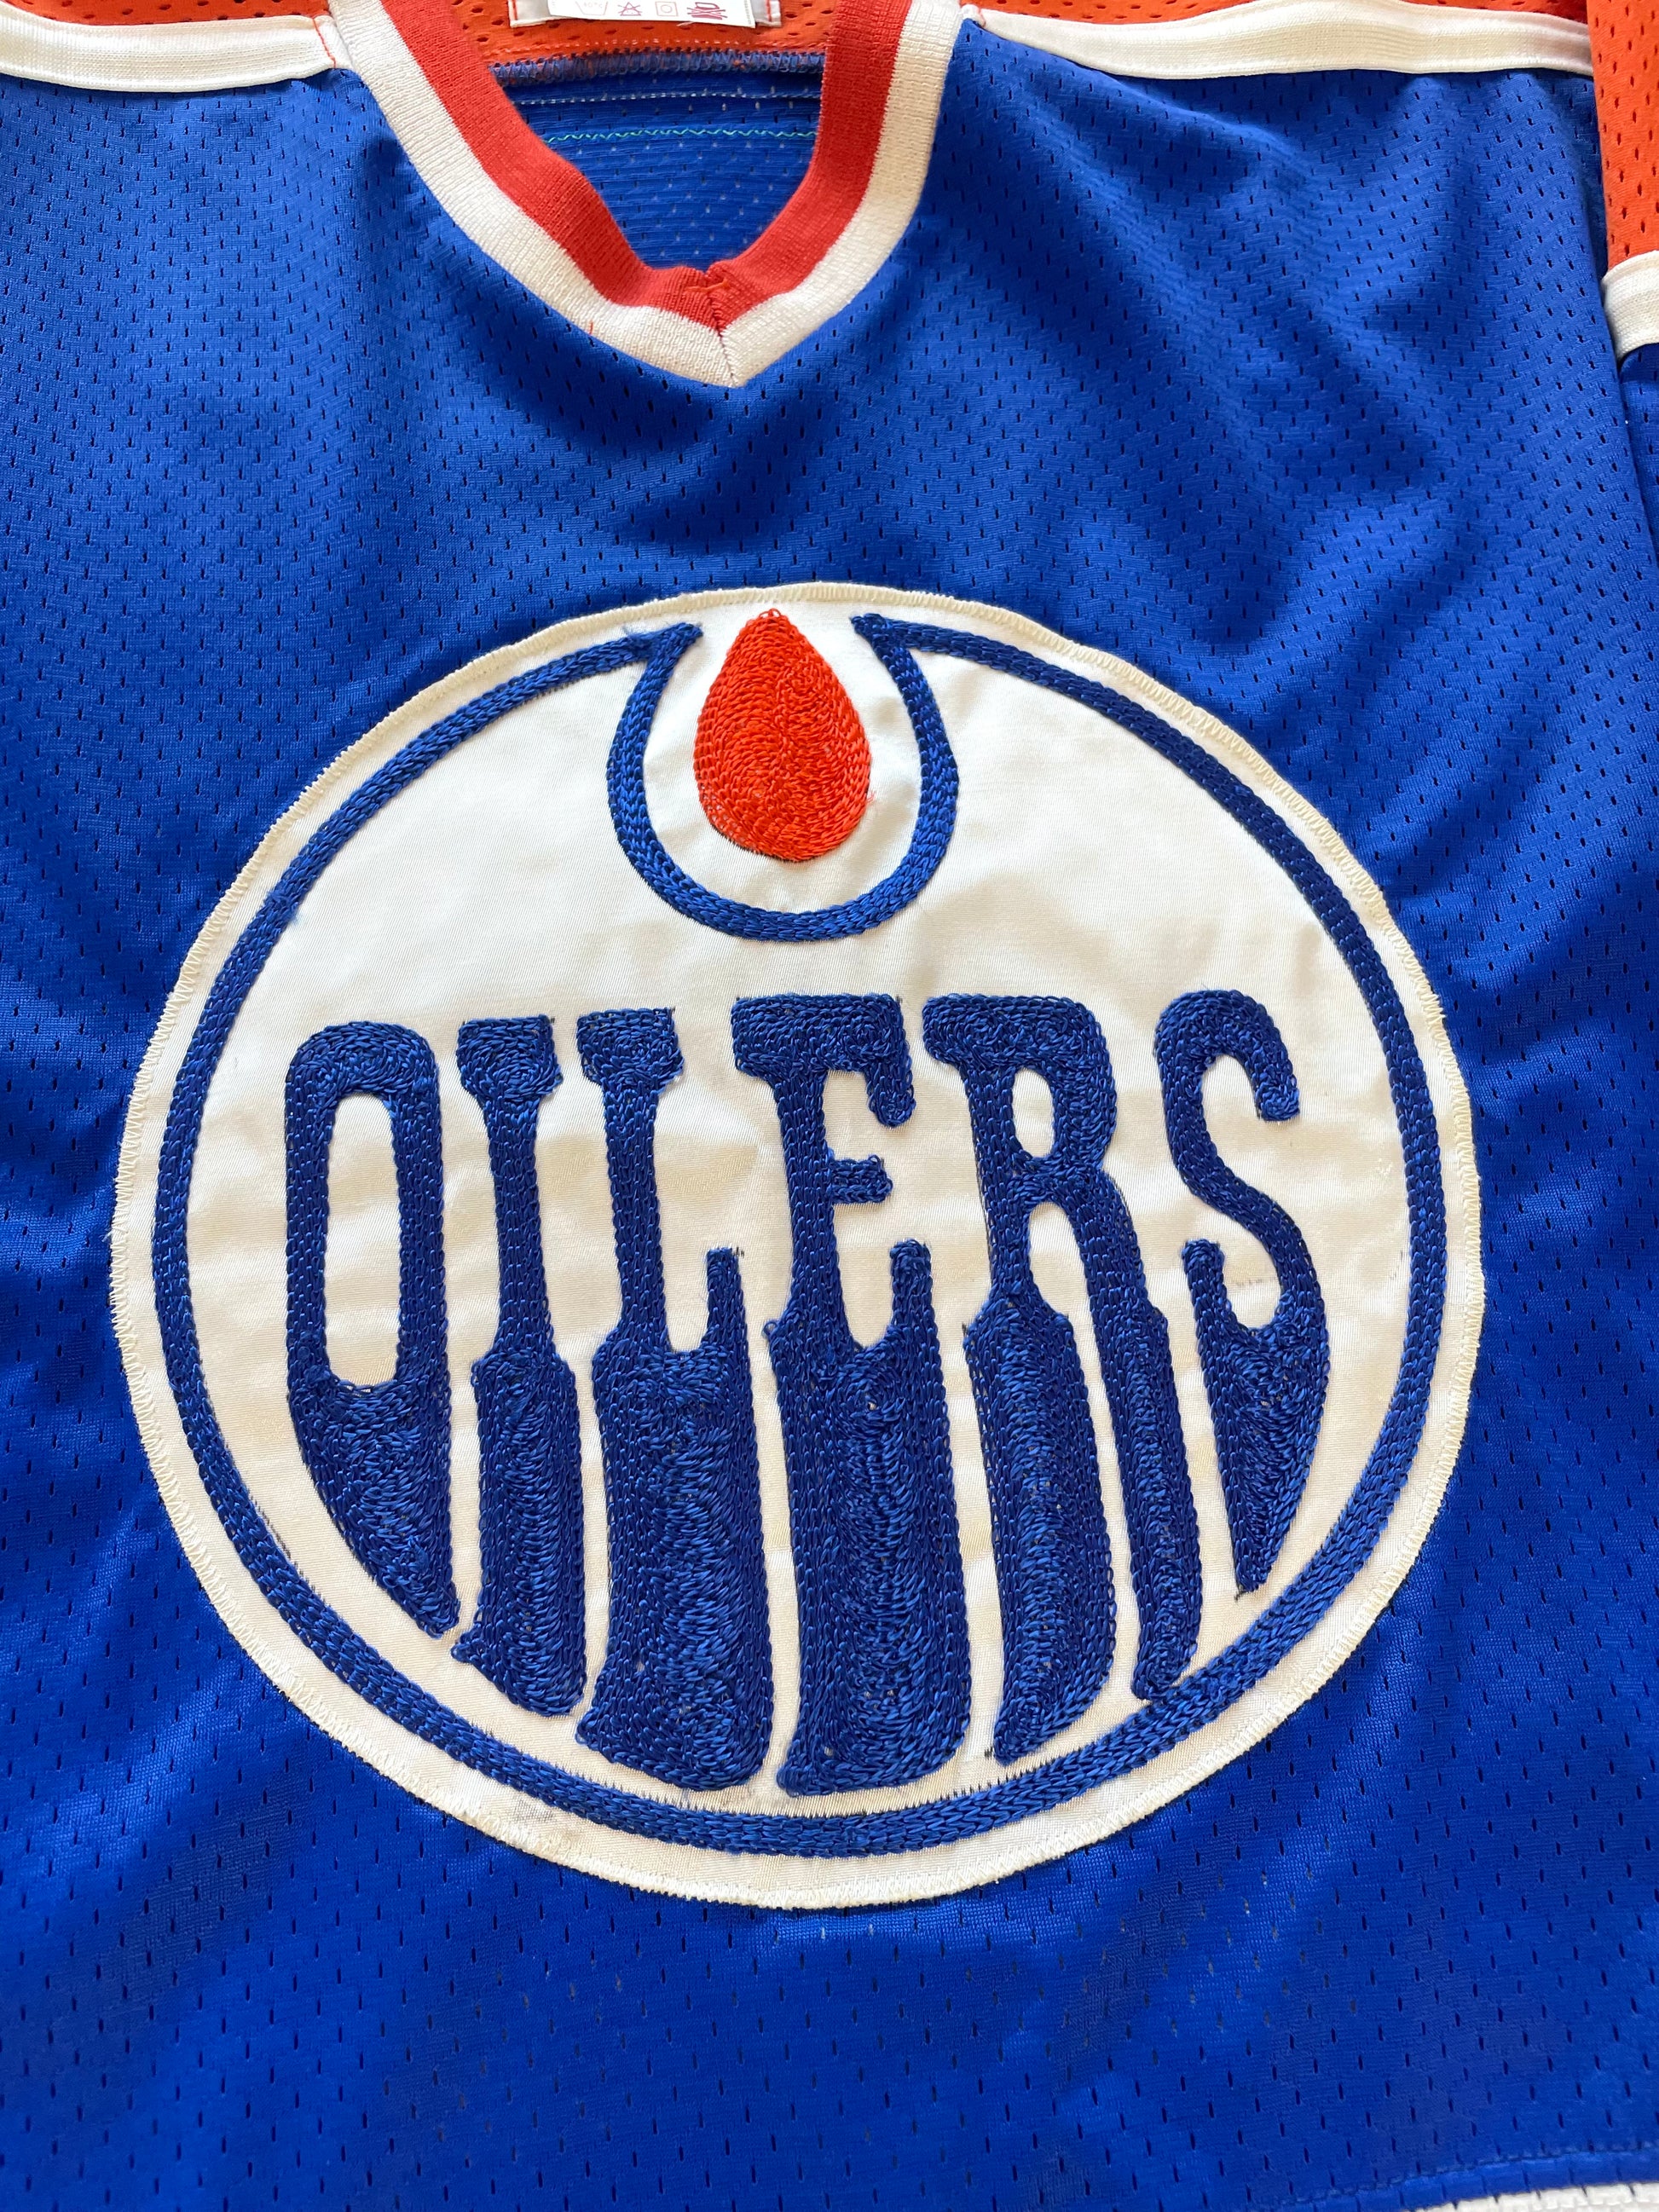 Edmonton Oilers Jerseys in Edmonton Oilers Team Shop 